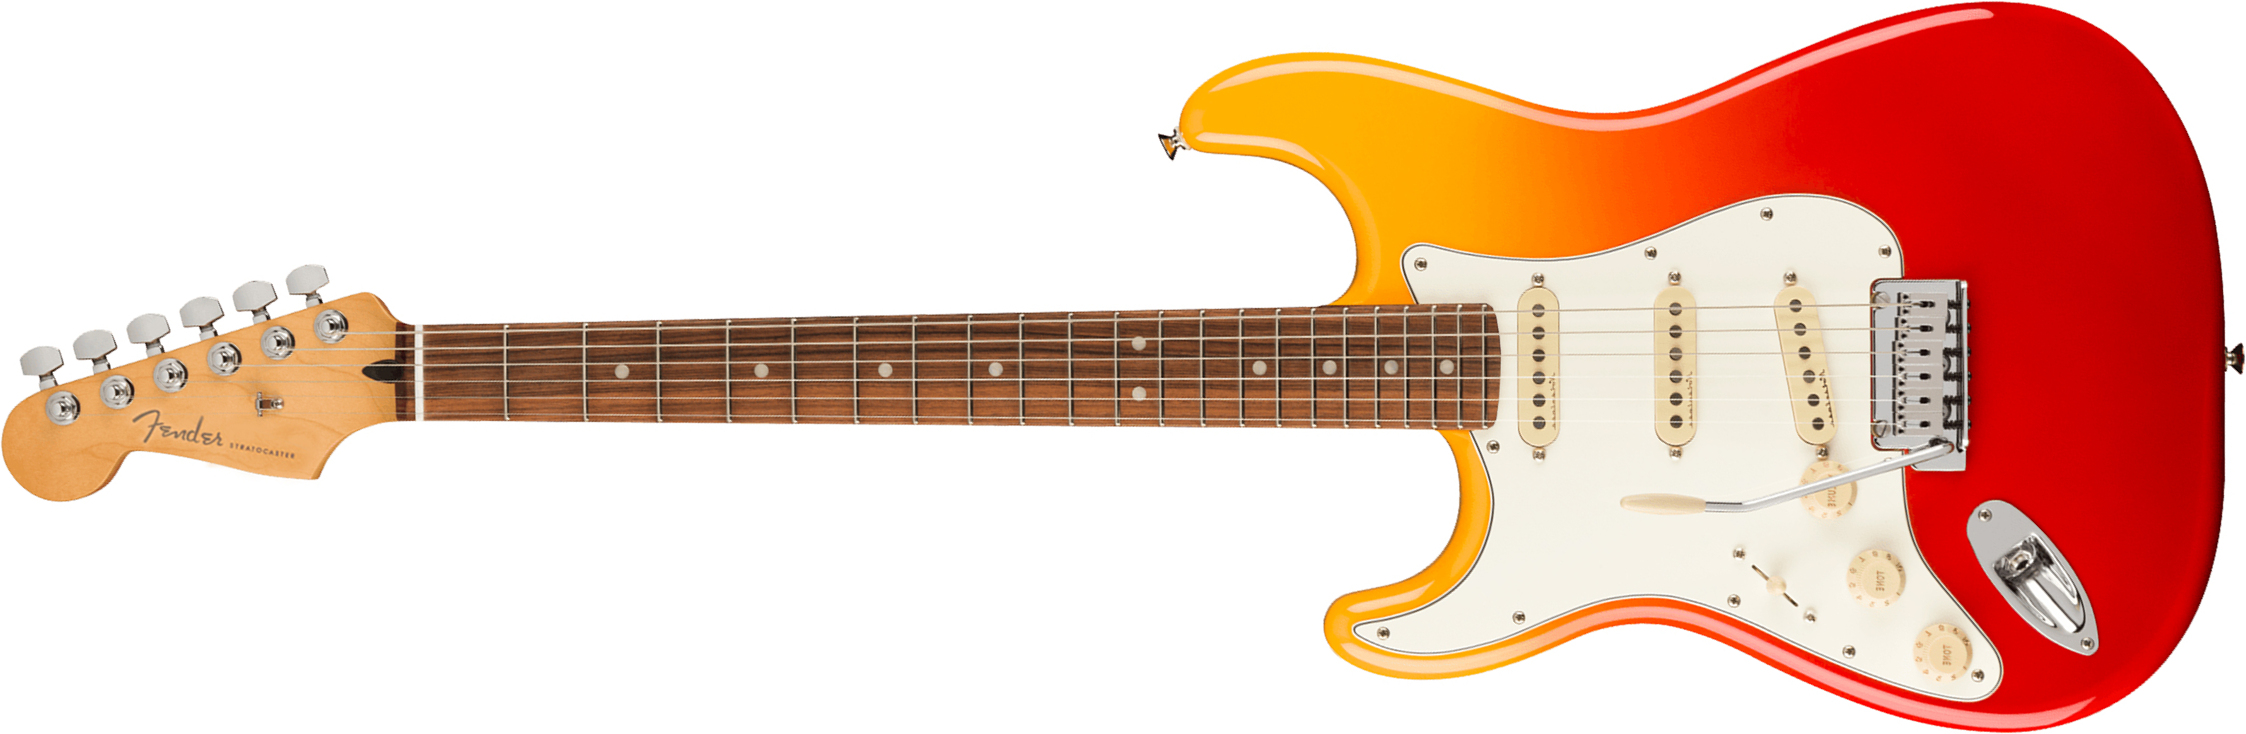 Fender Strat Player Plus Lh Gaucher Mex 3s Trem Pf - Tequila Sunrise - Left-handed electric guitar - Main picture